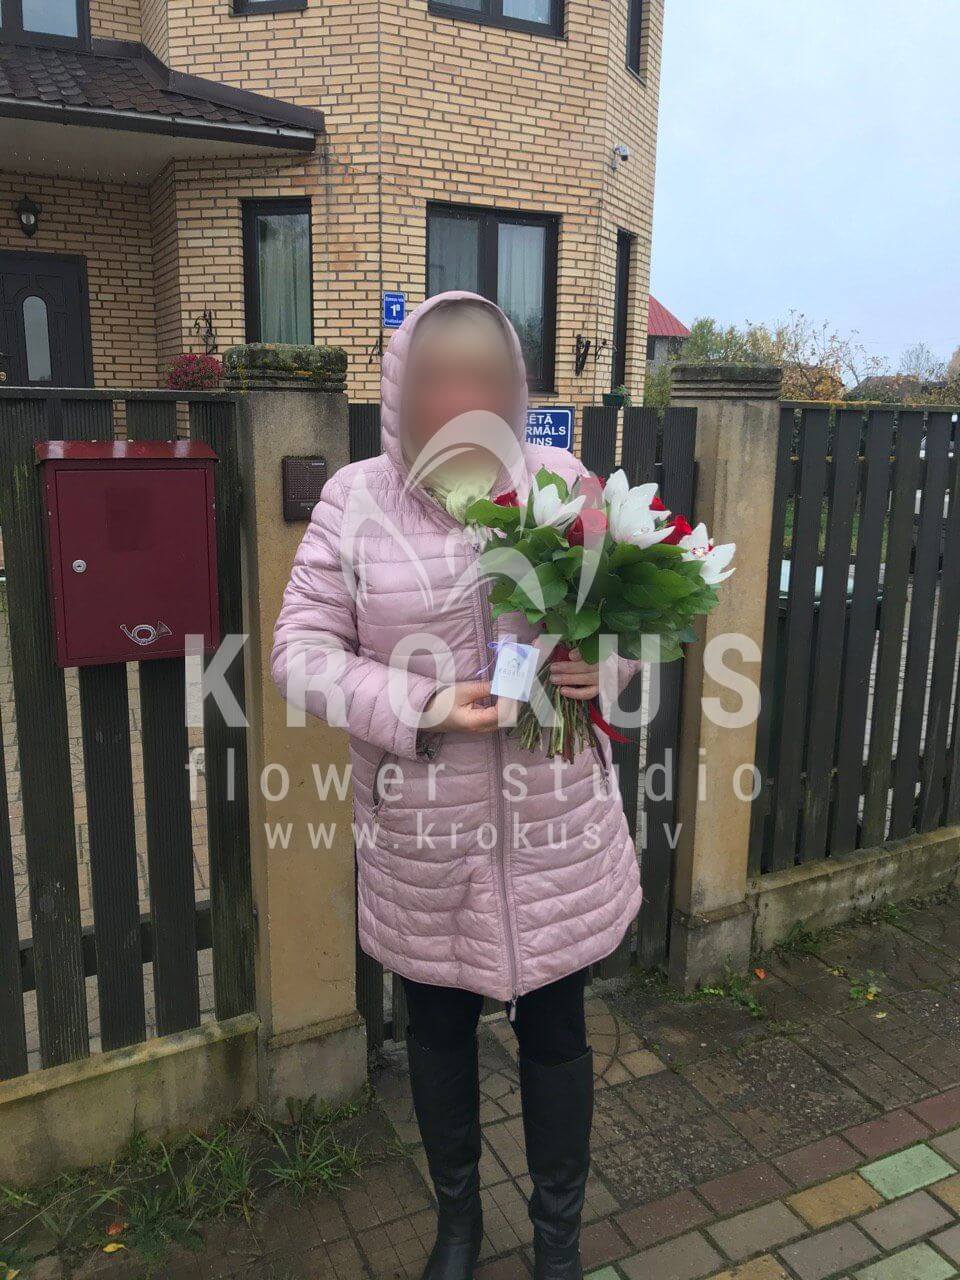 Deliver flowers to Rīga (orchidssalalred roses)